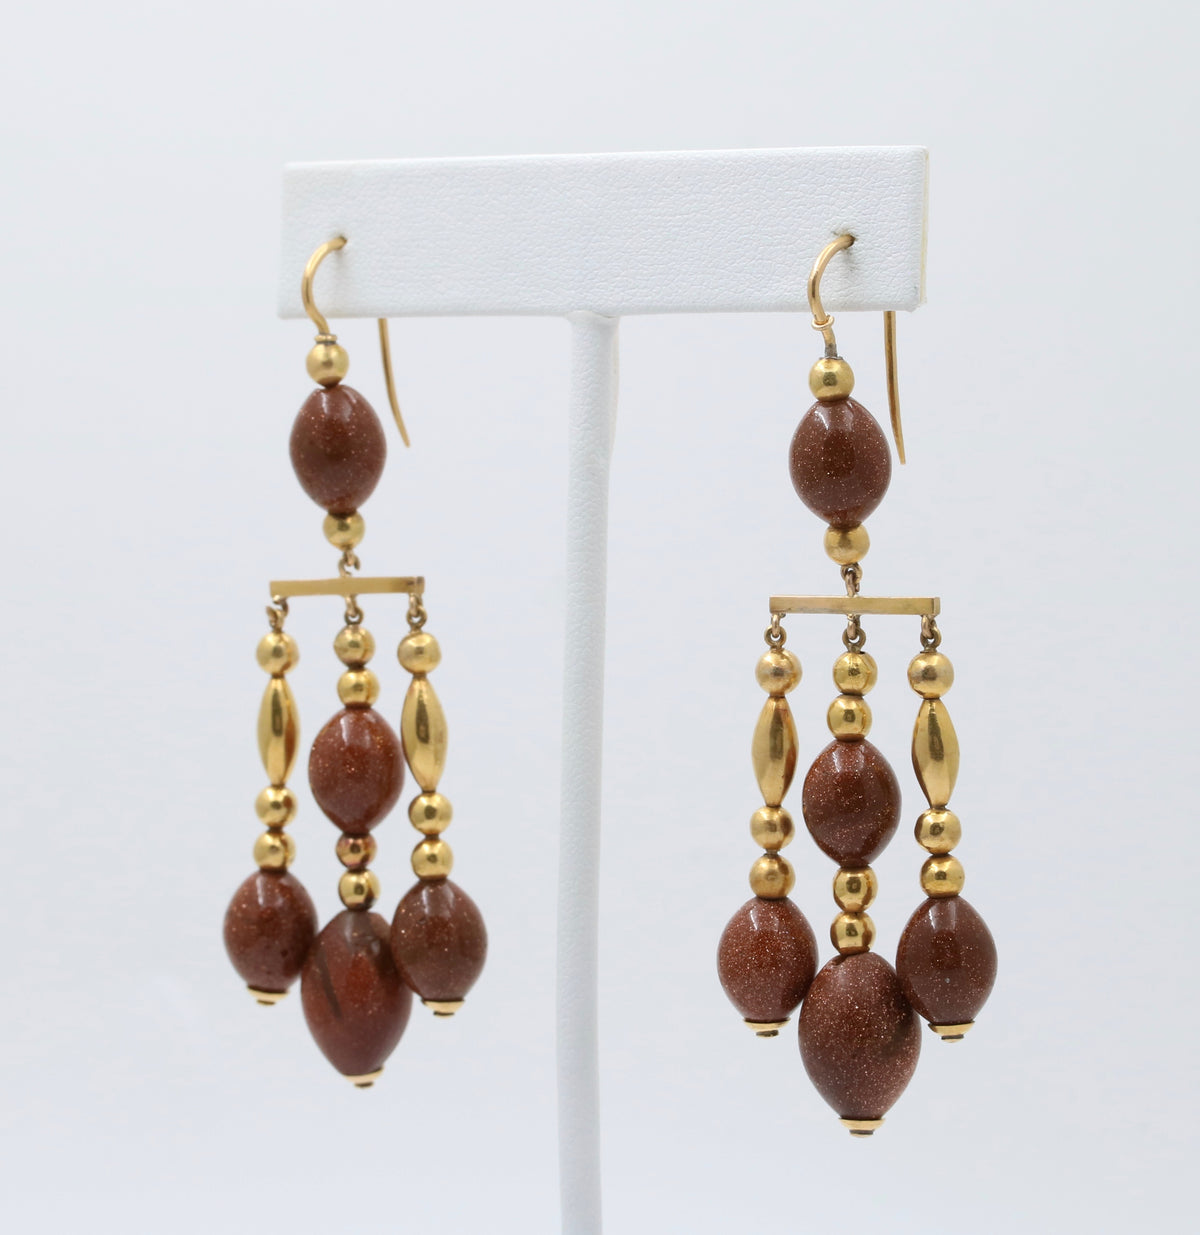 Large Vintage 18K Gold and Goldstone Dangling Chandelier Earrings